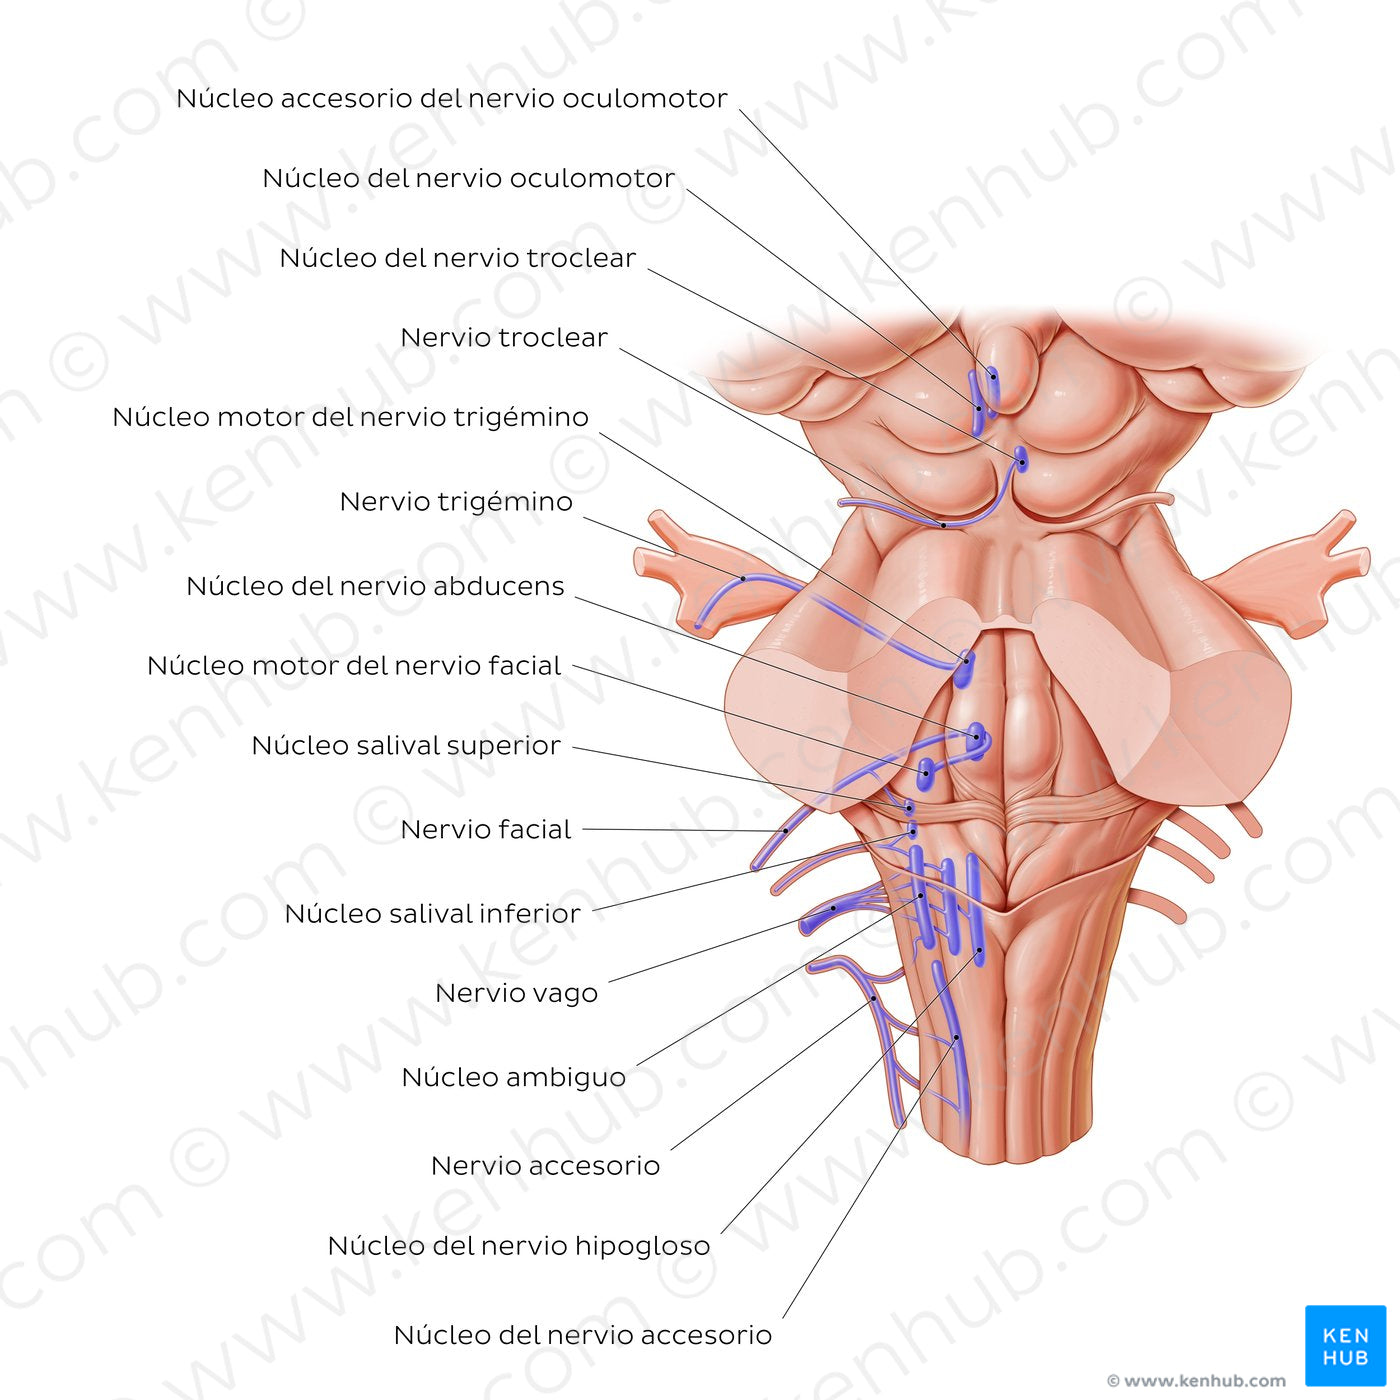 Cranial nerve nuclei - posterior view (efferent) (Spanish)